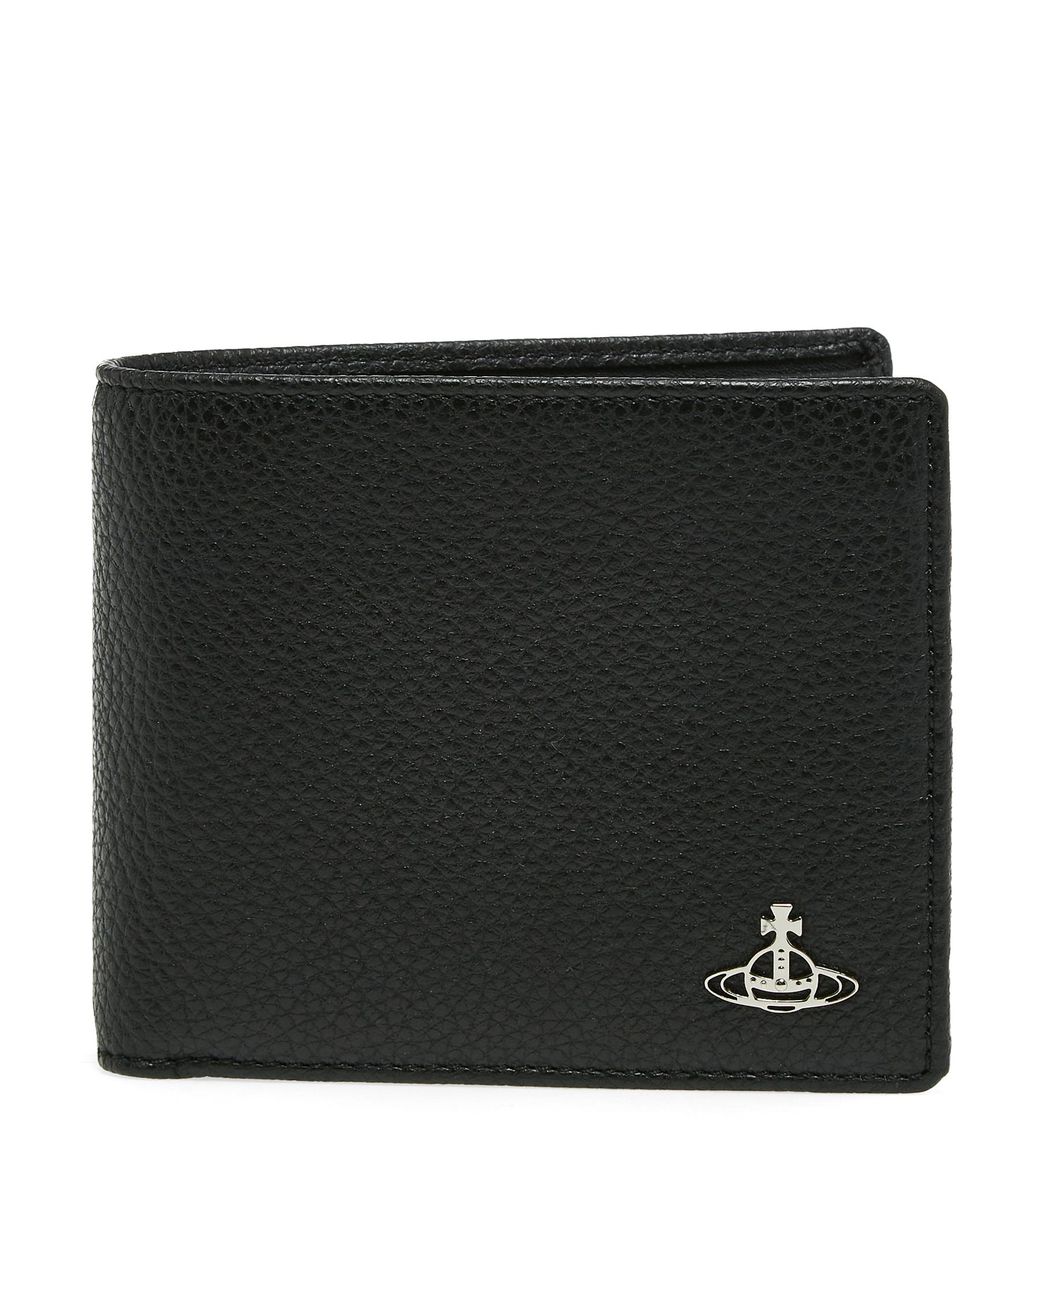 Vivienne Westwood Grain Leather Coin Pocket Wallet in Black for Men | Lyst